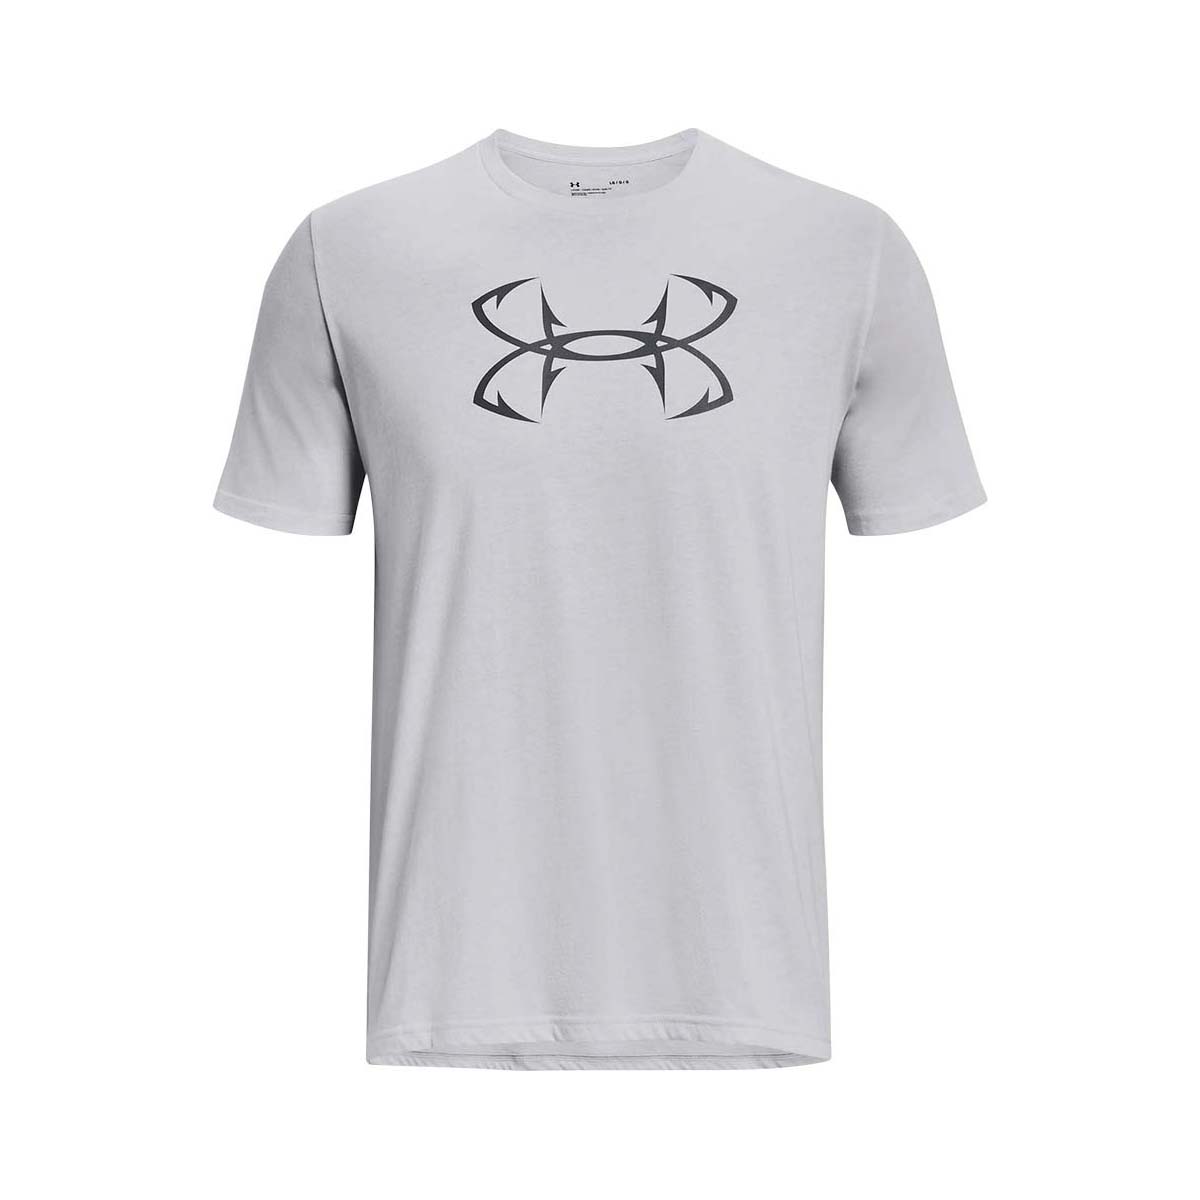 Under Armour Men's Fish Hook Logo Short Sleeve Tee S